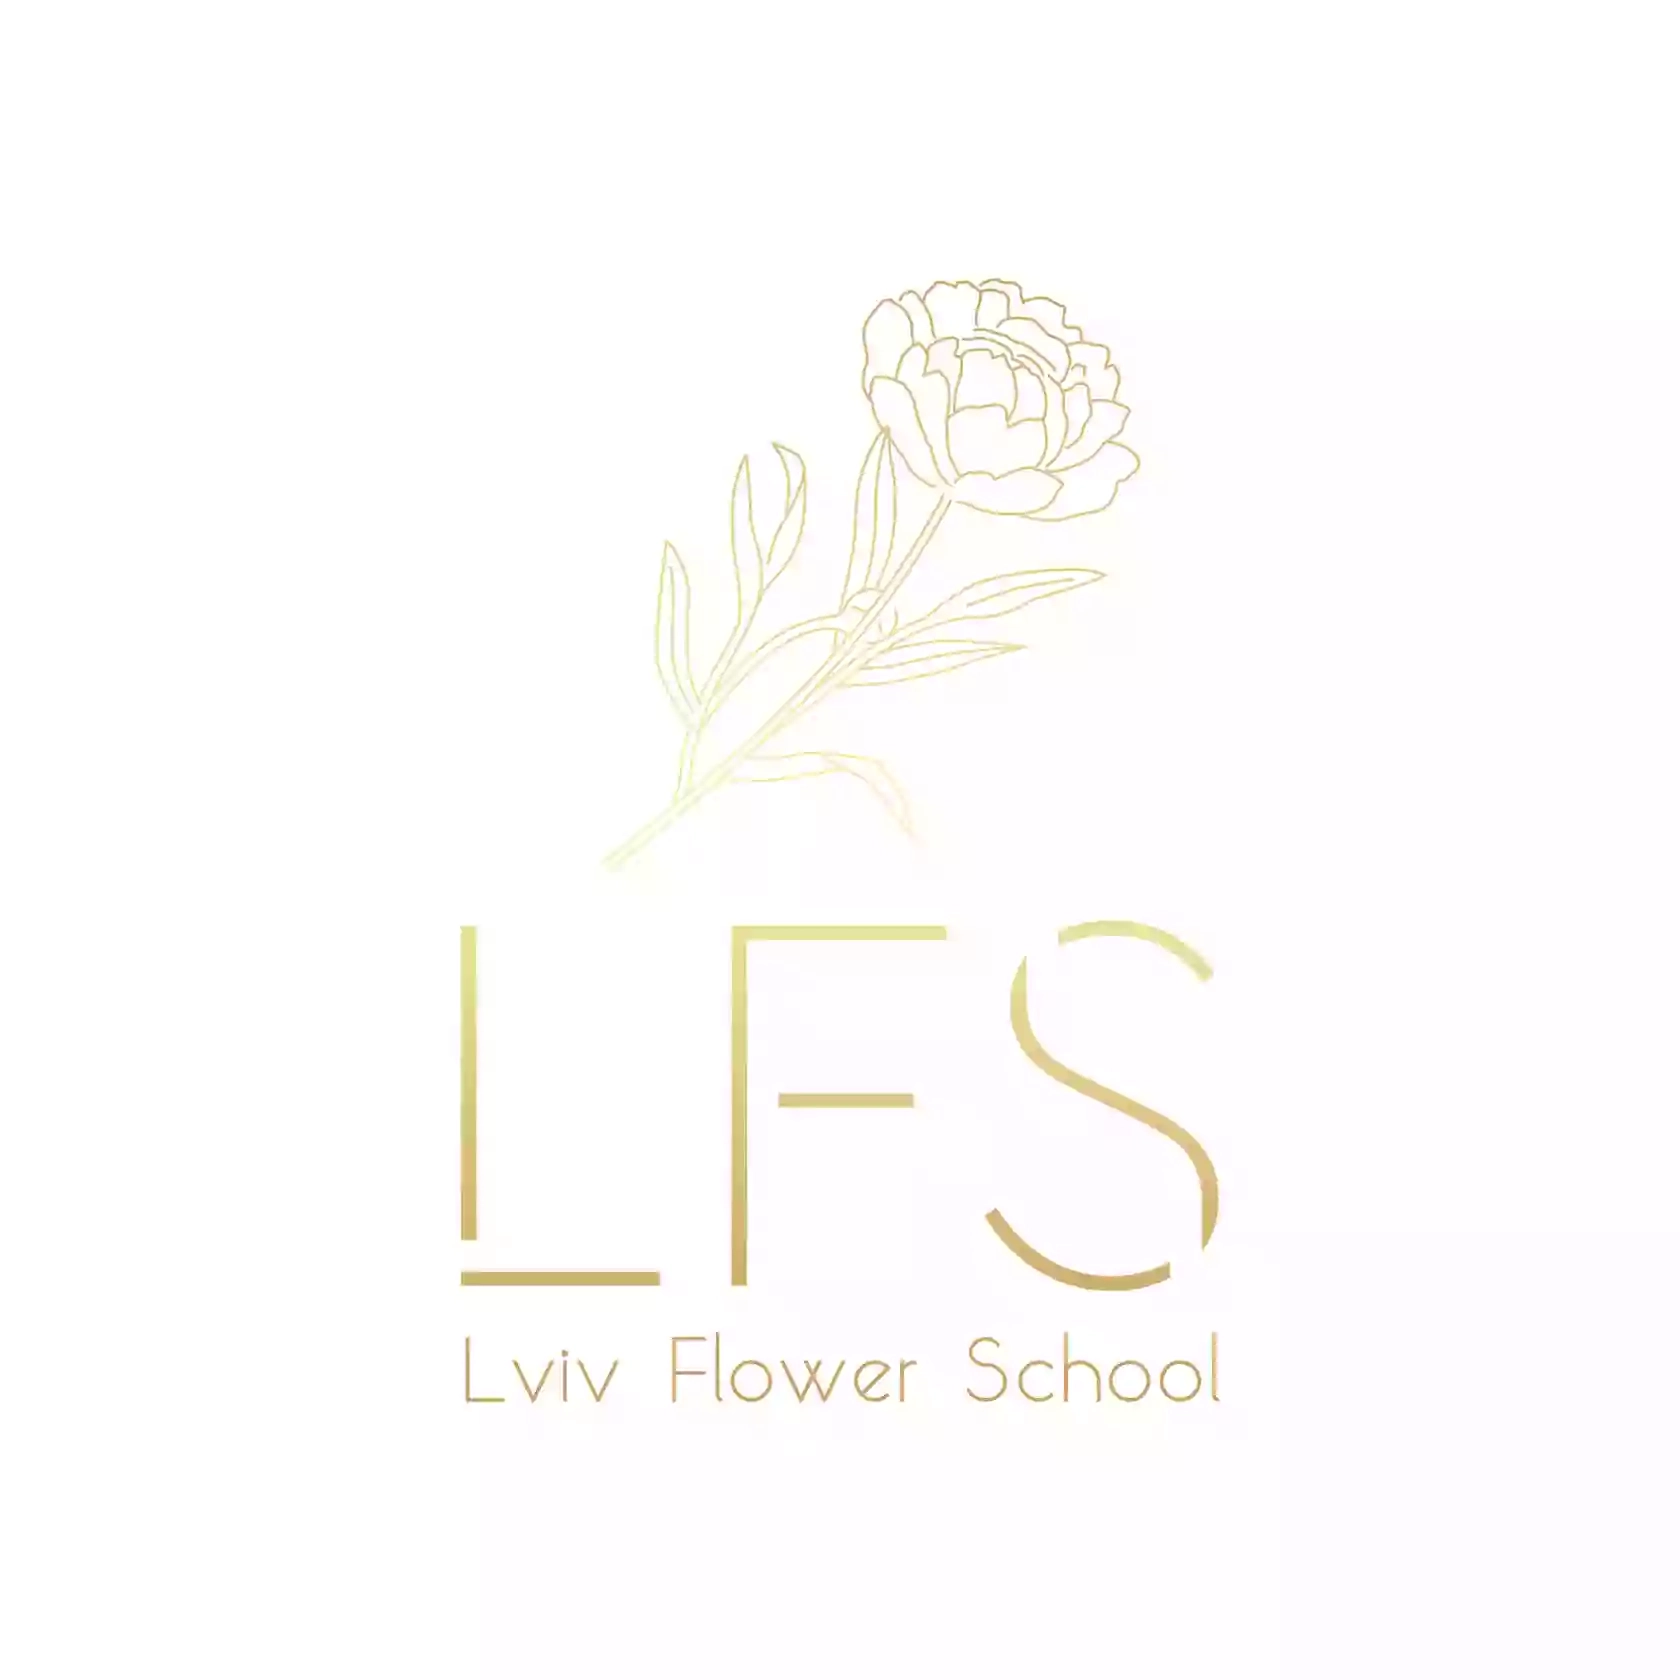 Lviv Flower School